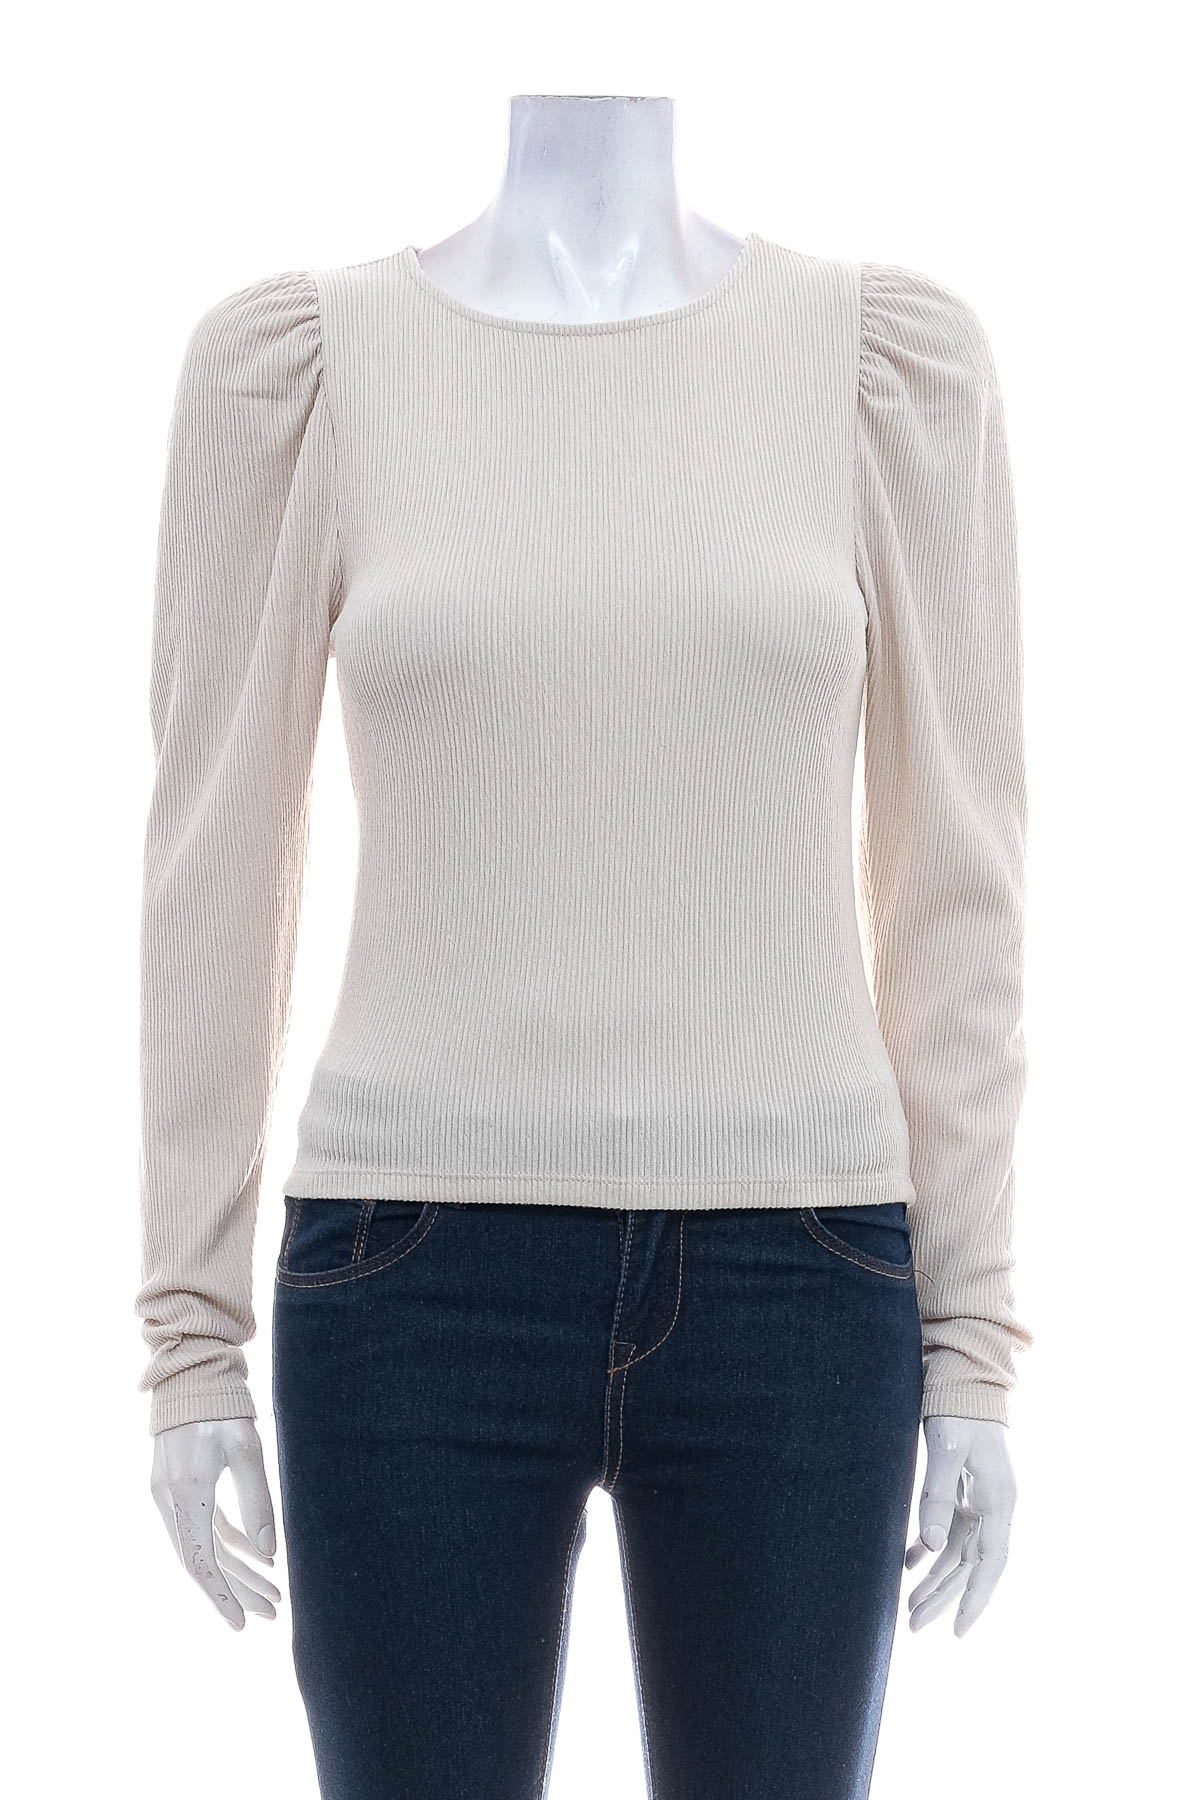 Women's blouse - Gina Tricot - 0